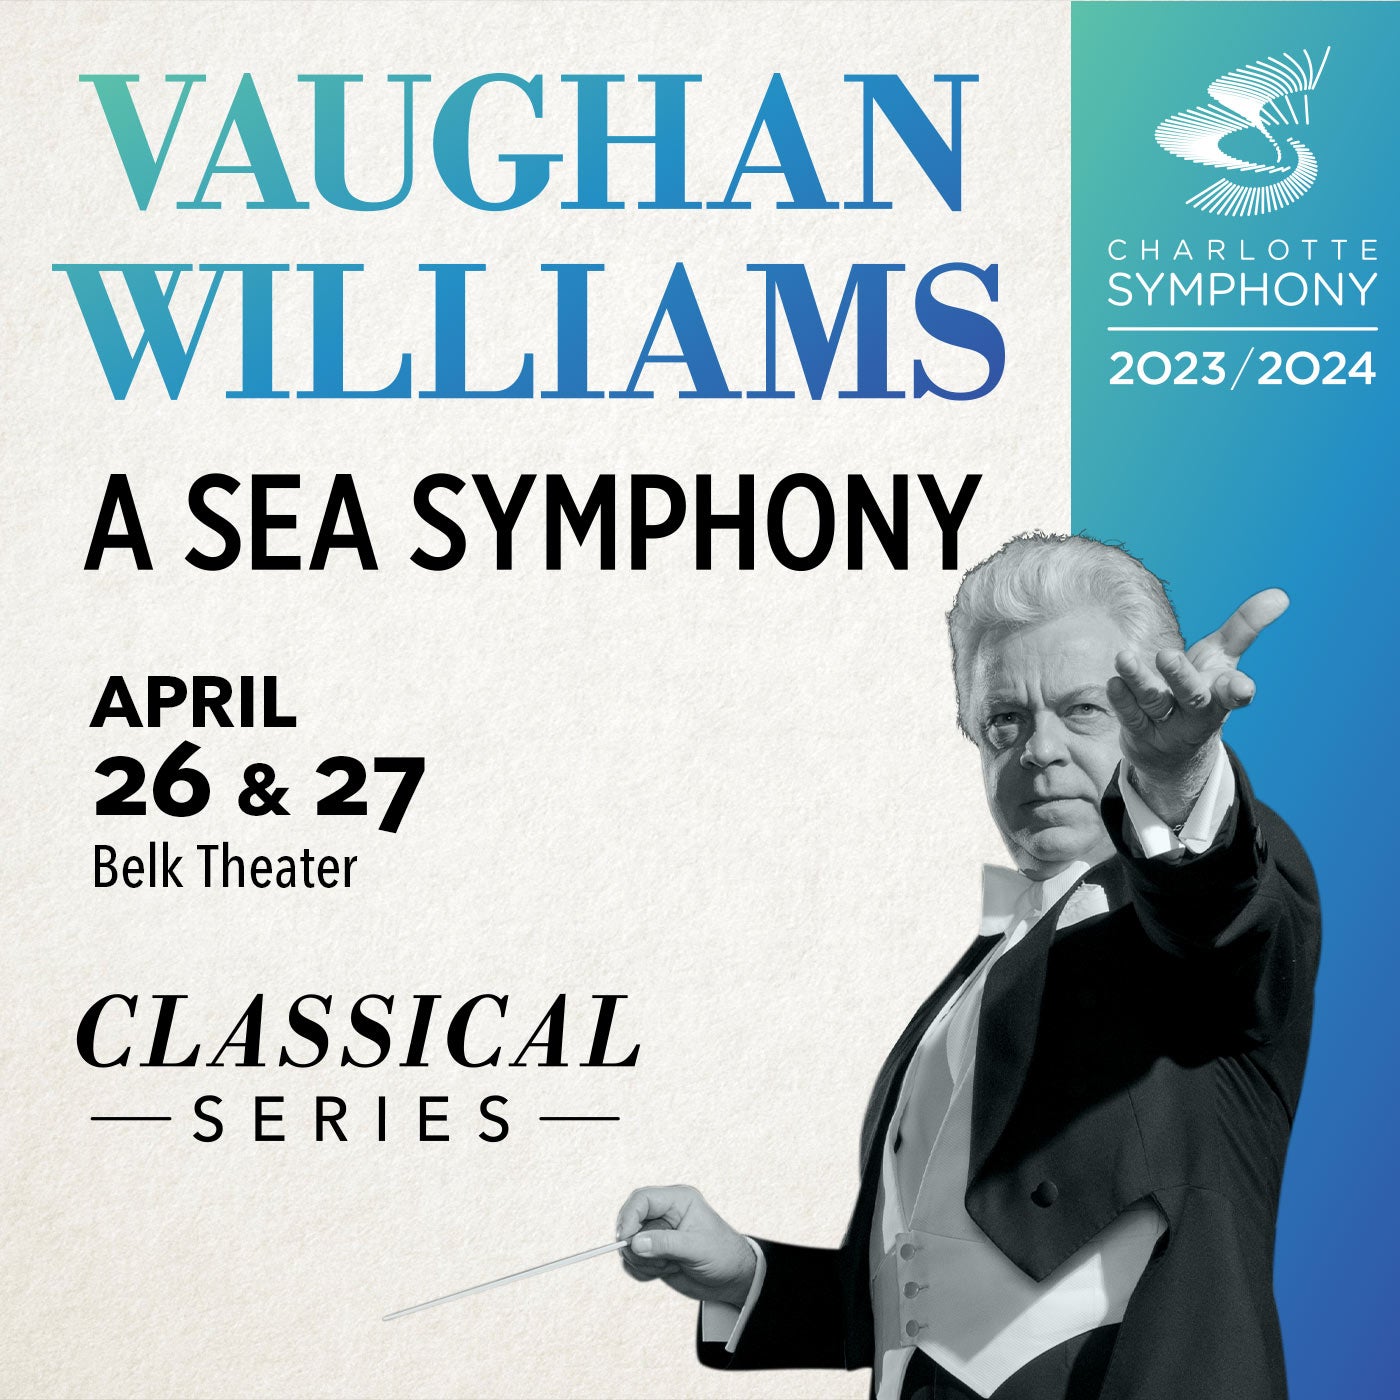 Charlotte Symphony: Vaughan Williams' A Sea Symphony